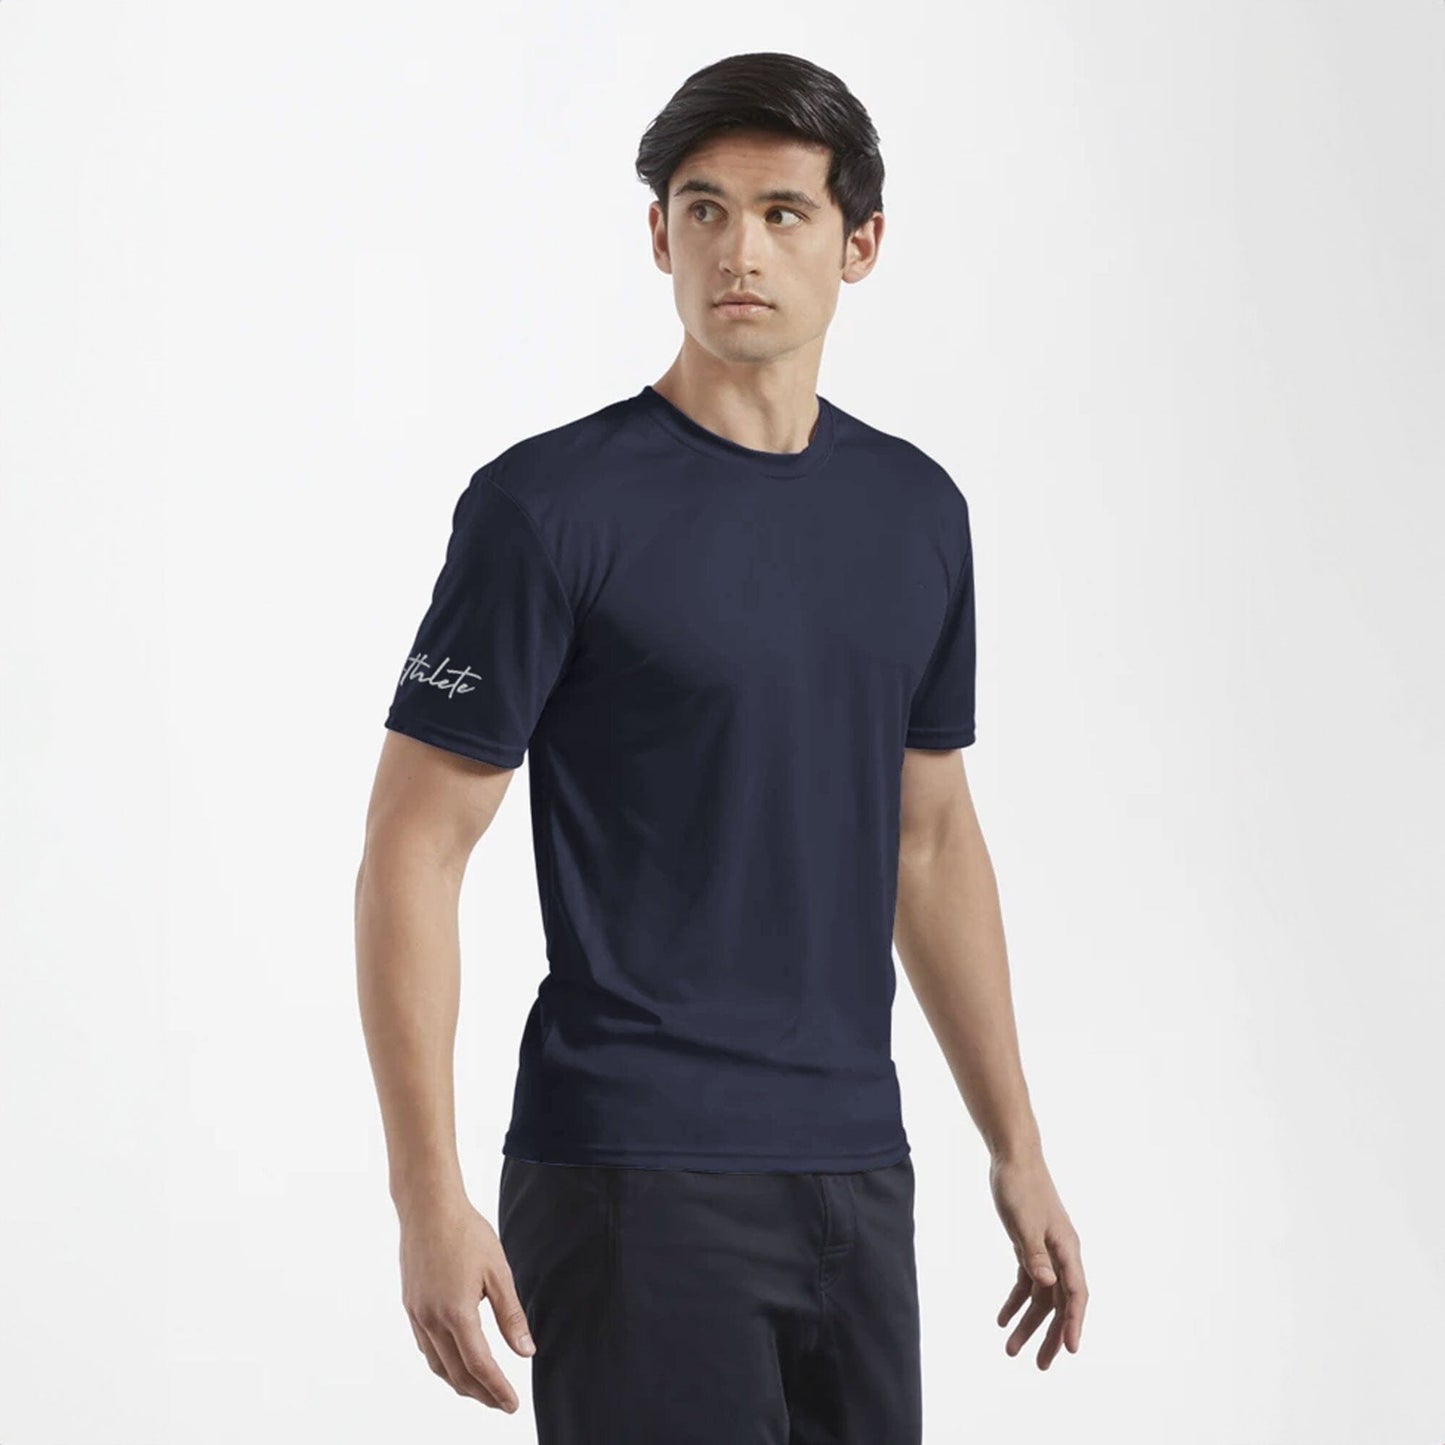 Men's Athlete Printed On Shoulder Activewear Crew Neck Minor Fault Tee Shirt